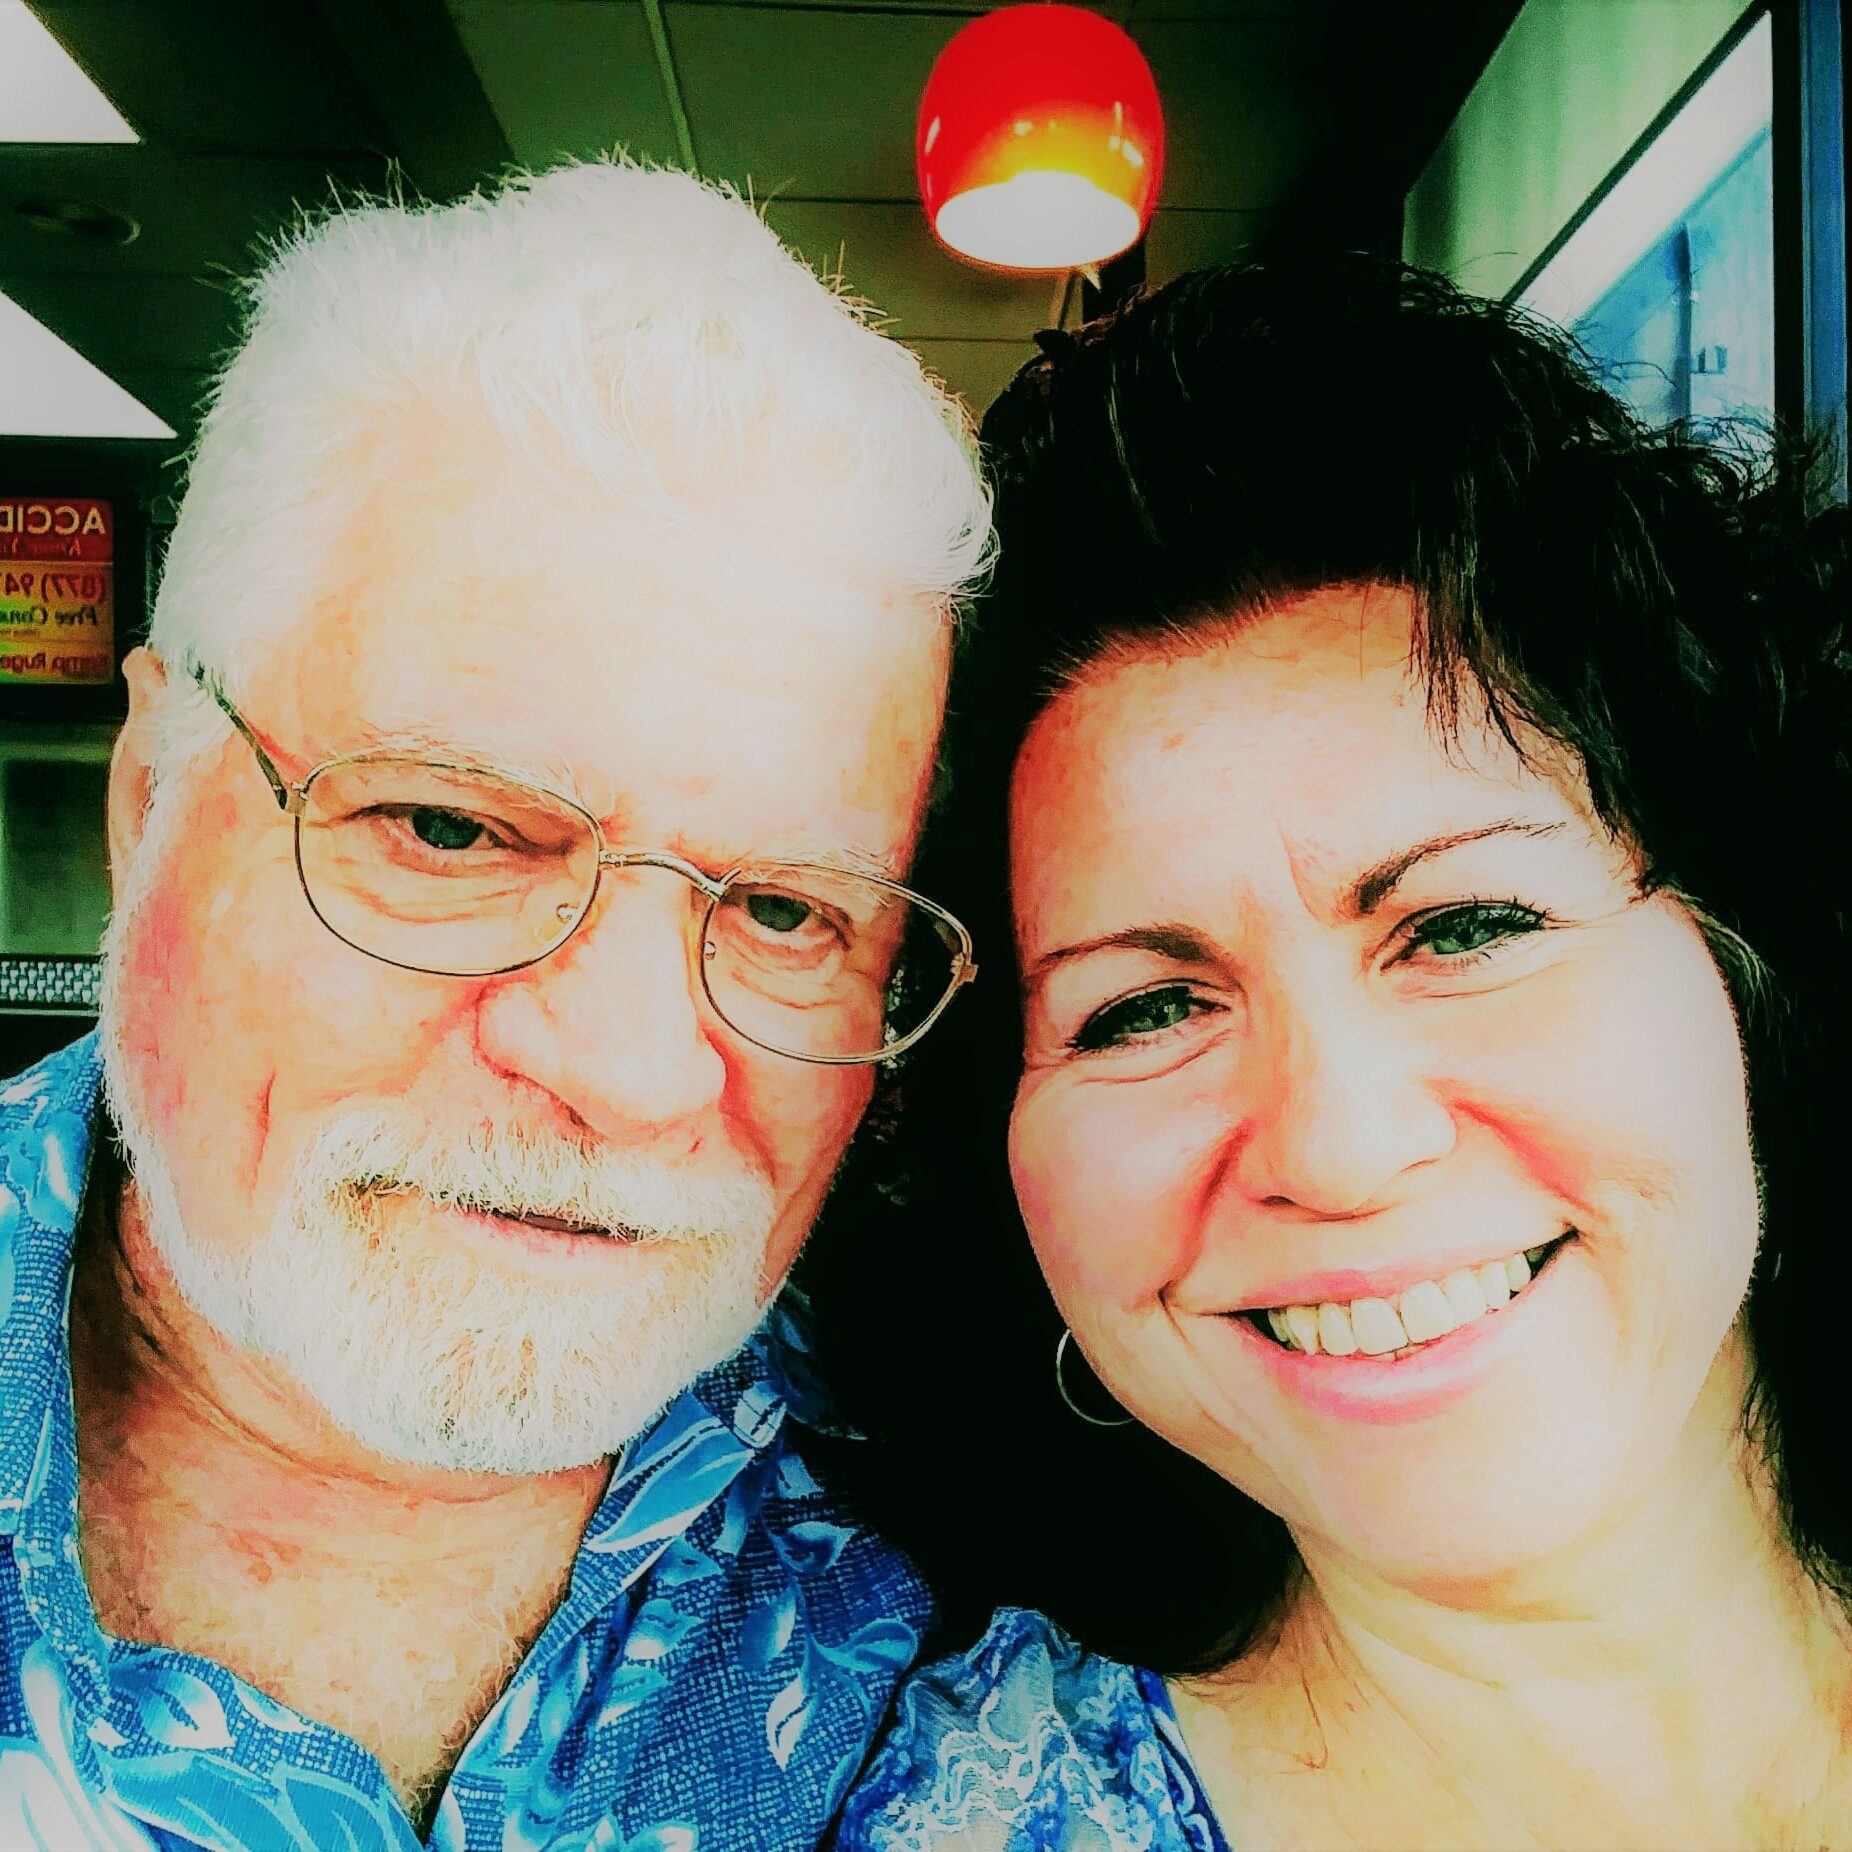 Dennis and Brenda at Hardees Aug 4 2019 - b